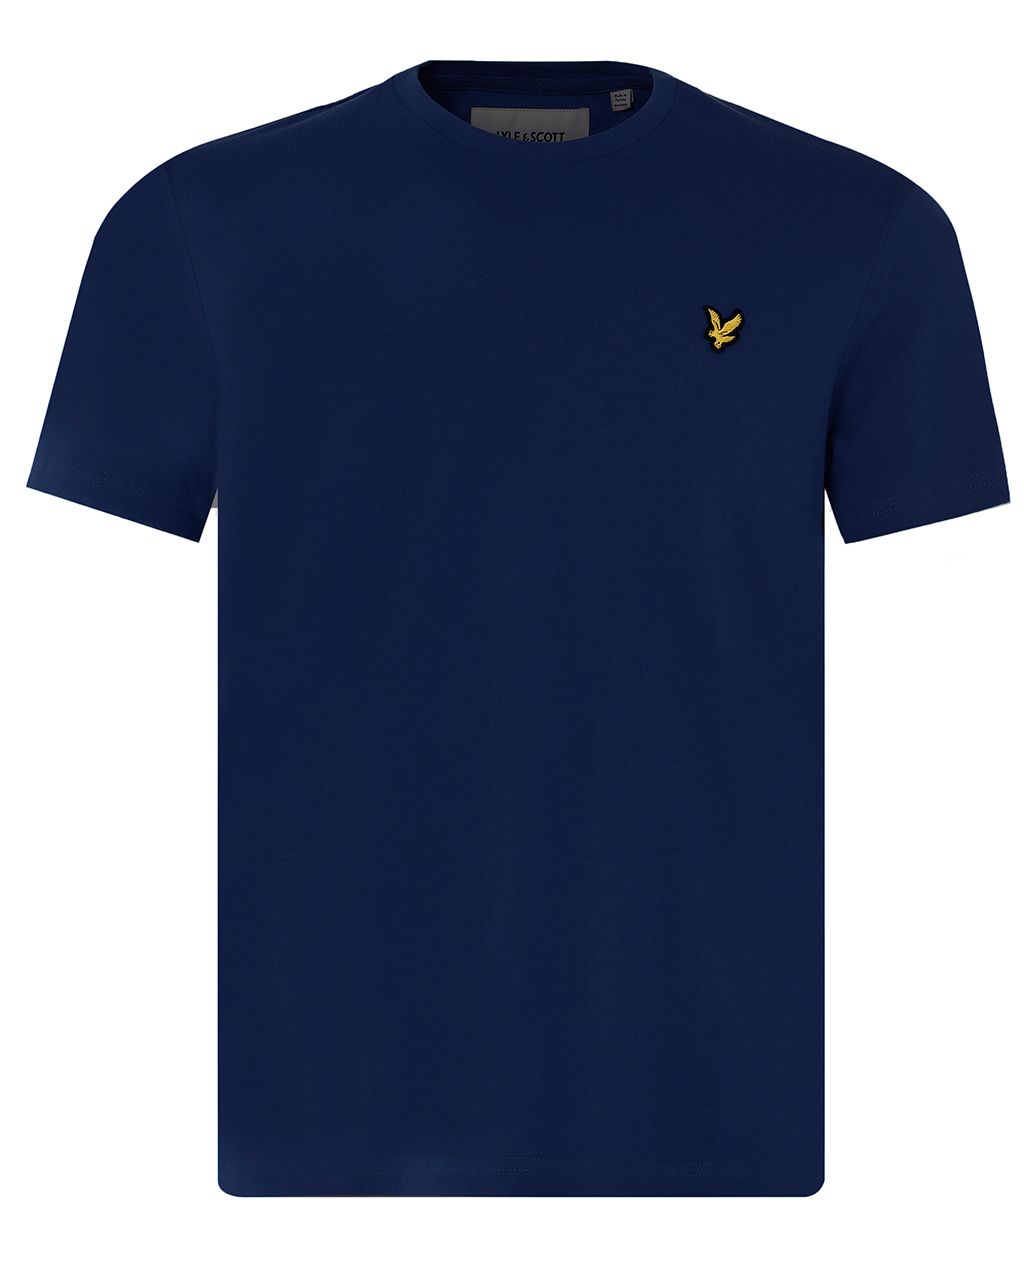 Lyle & Scott T-shirt KM Donker blauw 077790-001-L